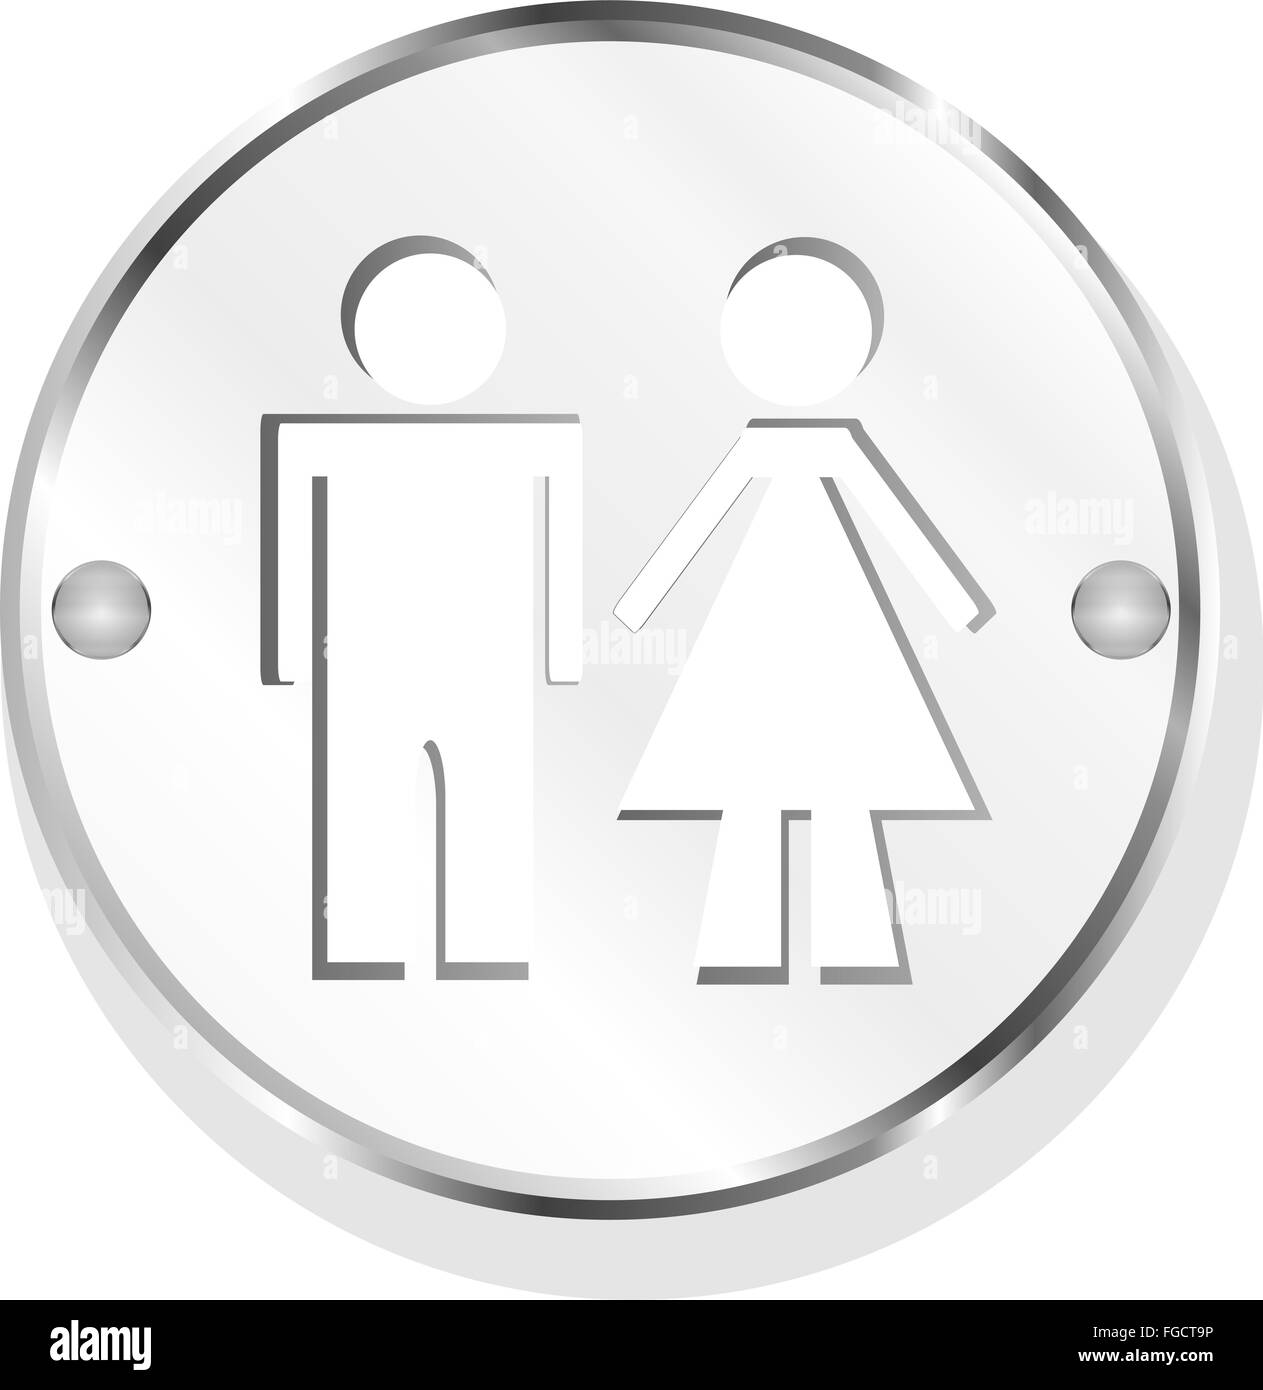 icon toilet button, Man and Woman, isolated on white Stock Photo